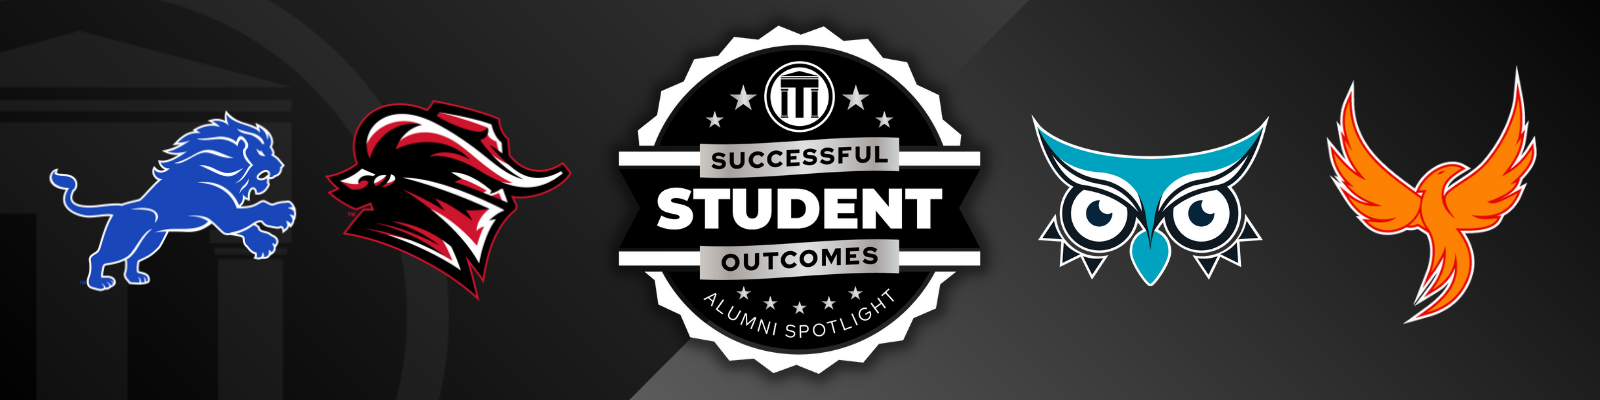 lion, red raider, owl, phoenix logos - Successful Student Outcomes Alumni Spotlight